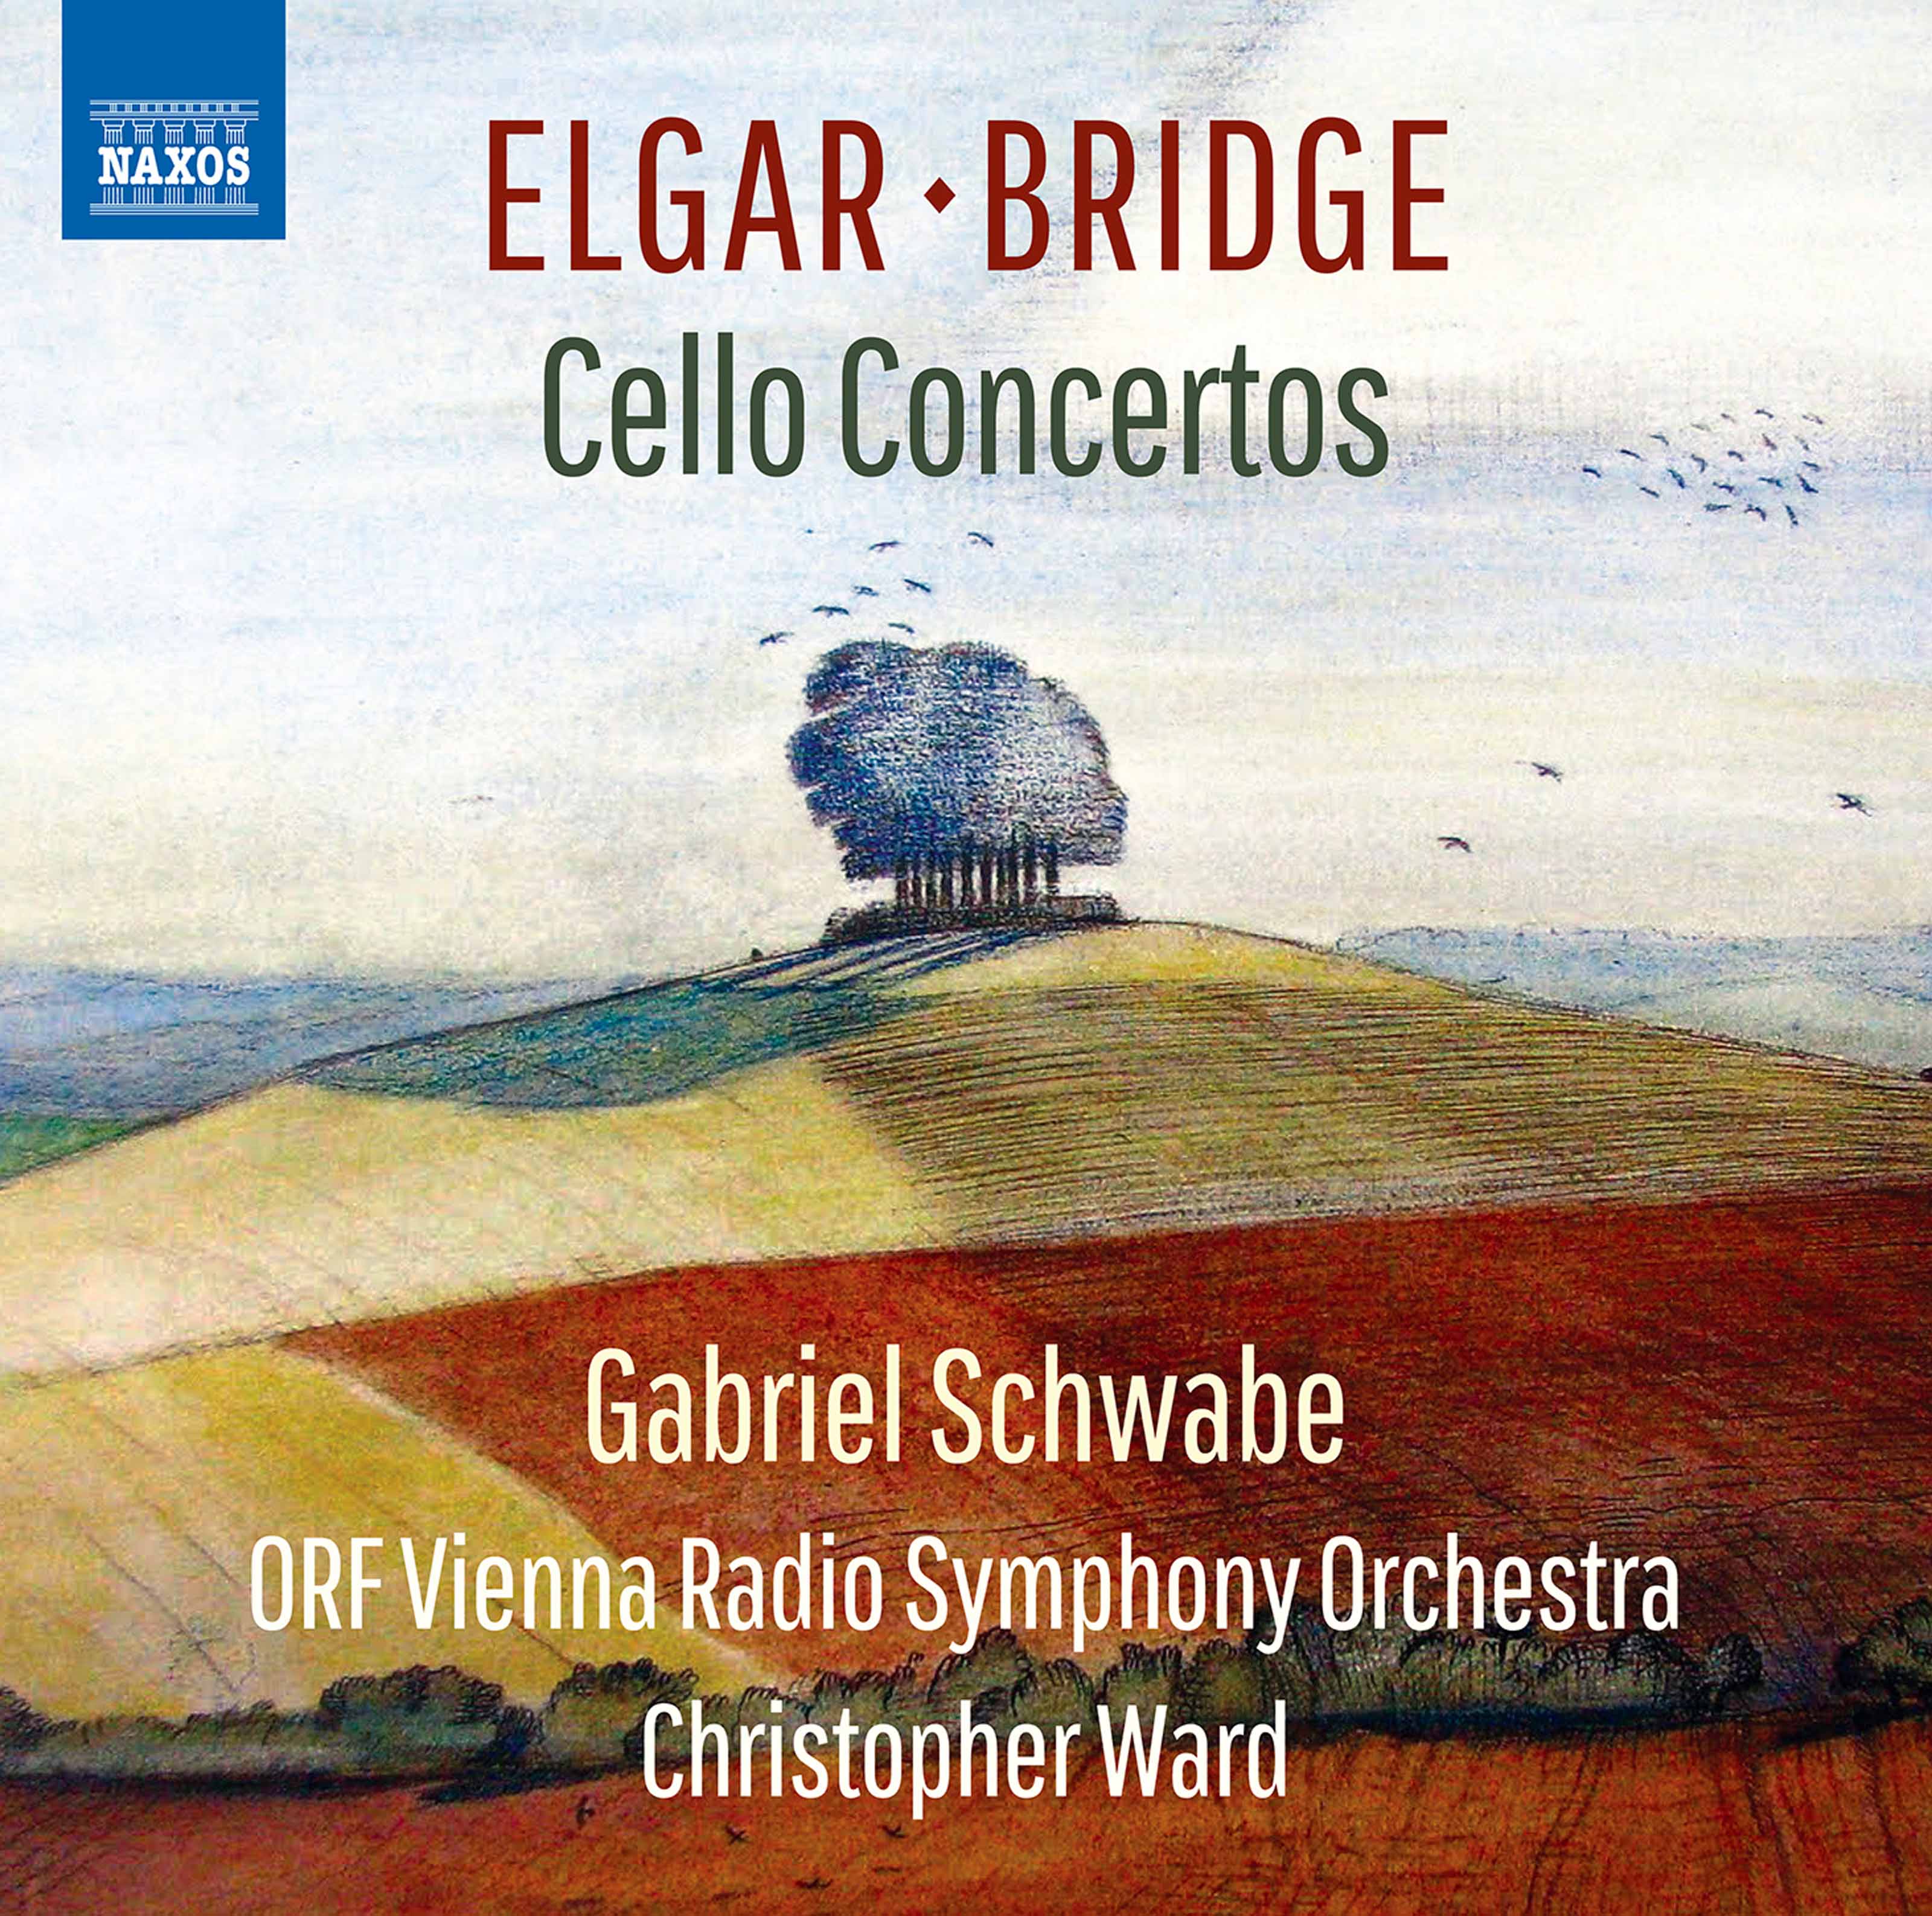 Bridge and Elgar Cello Concertos